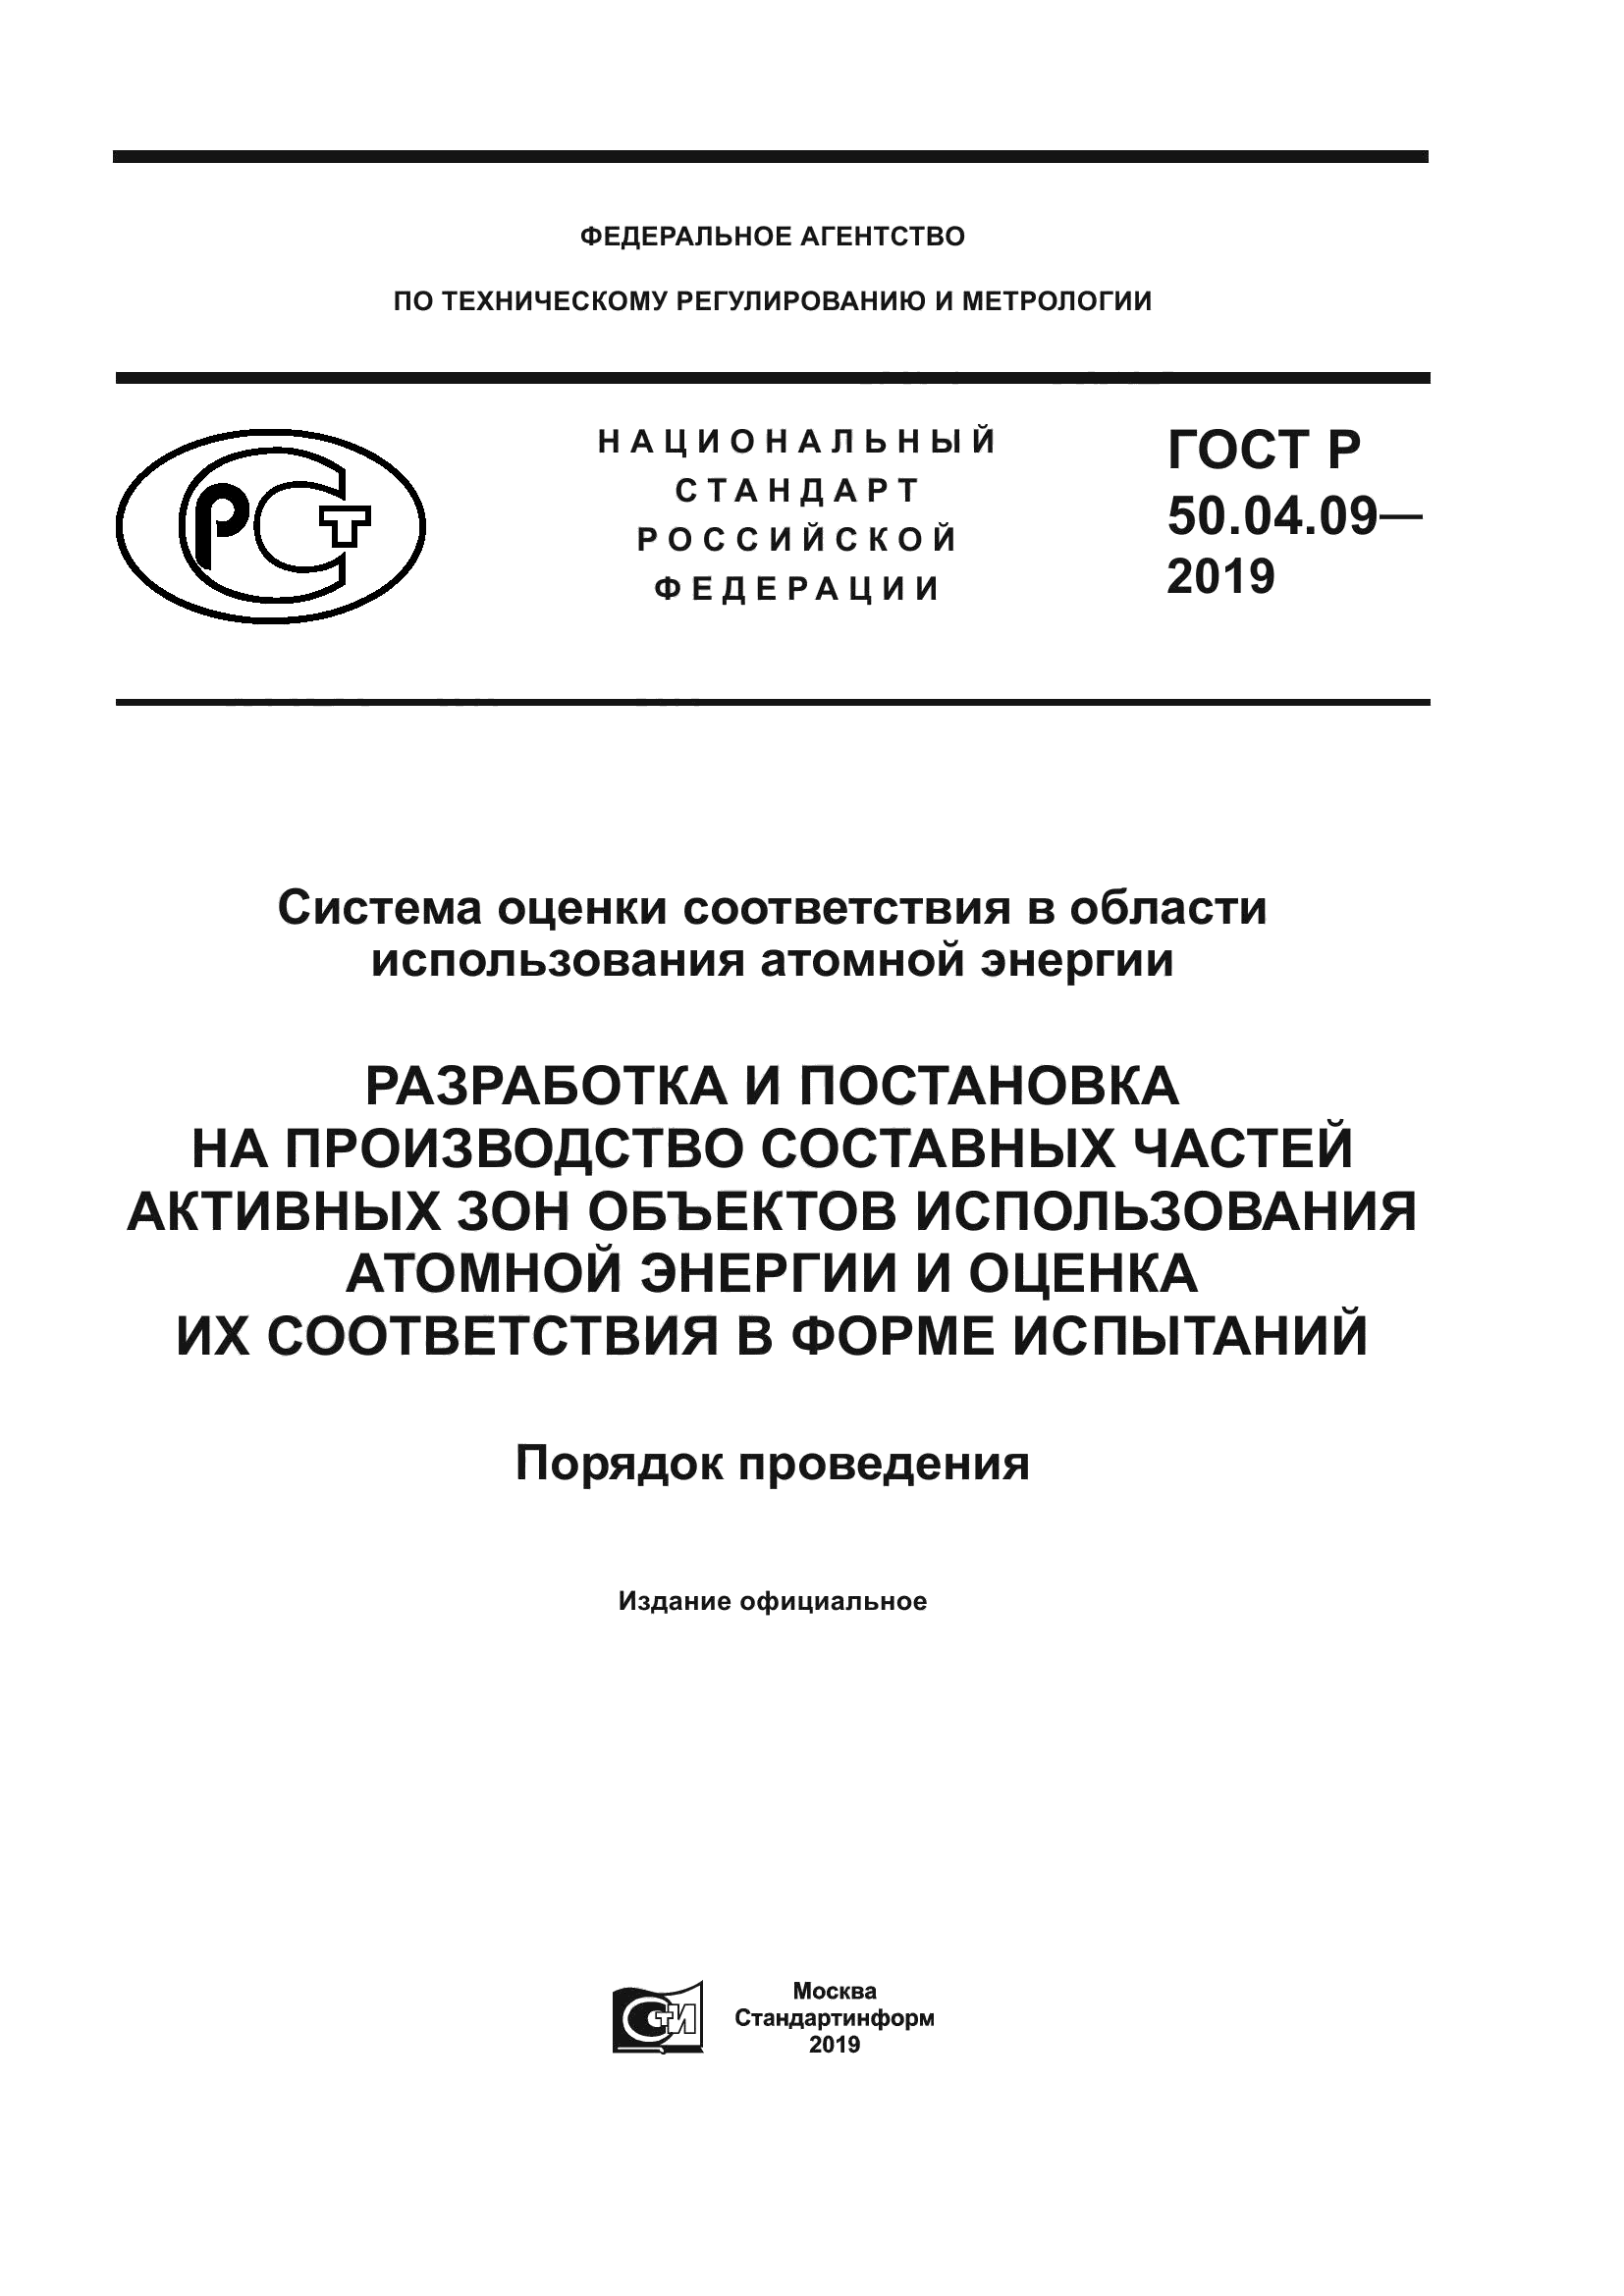 ГОСТ Р 50.04.09-2019